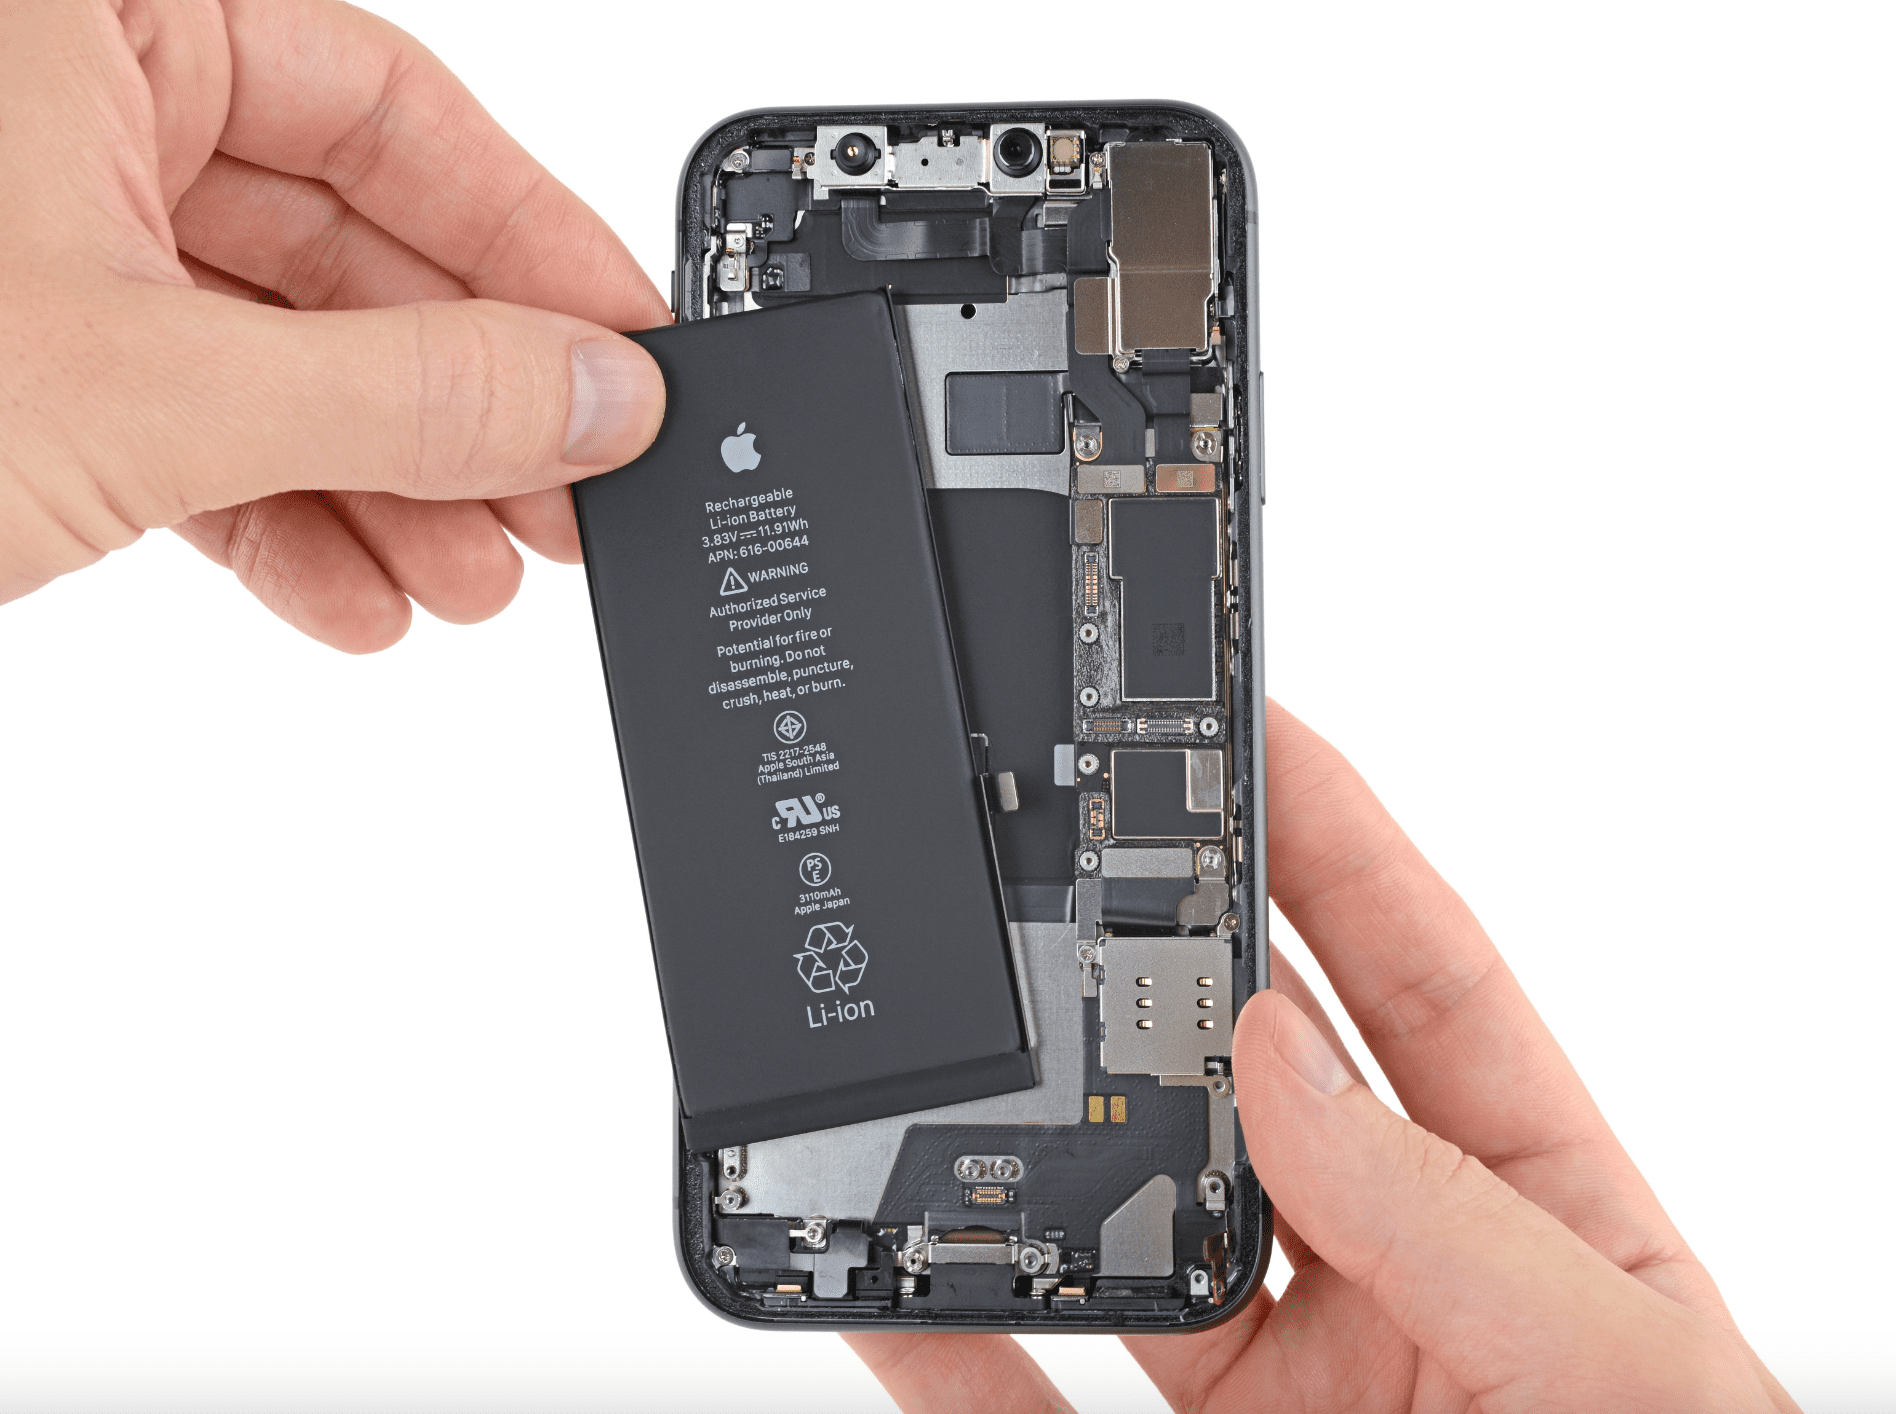 Batterie iPhone 11